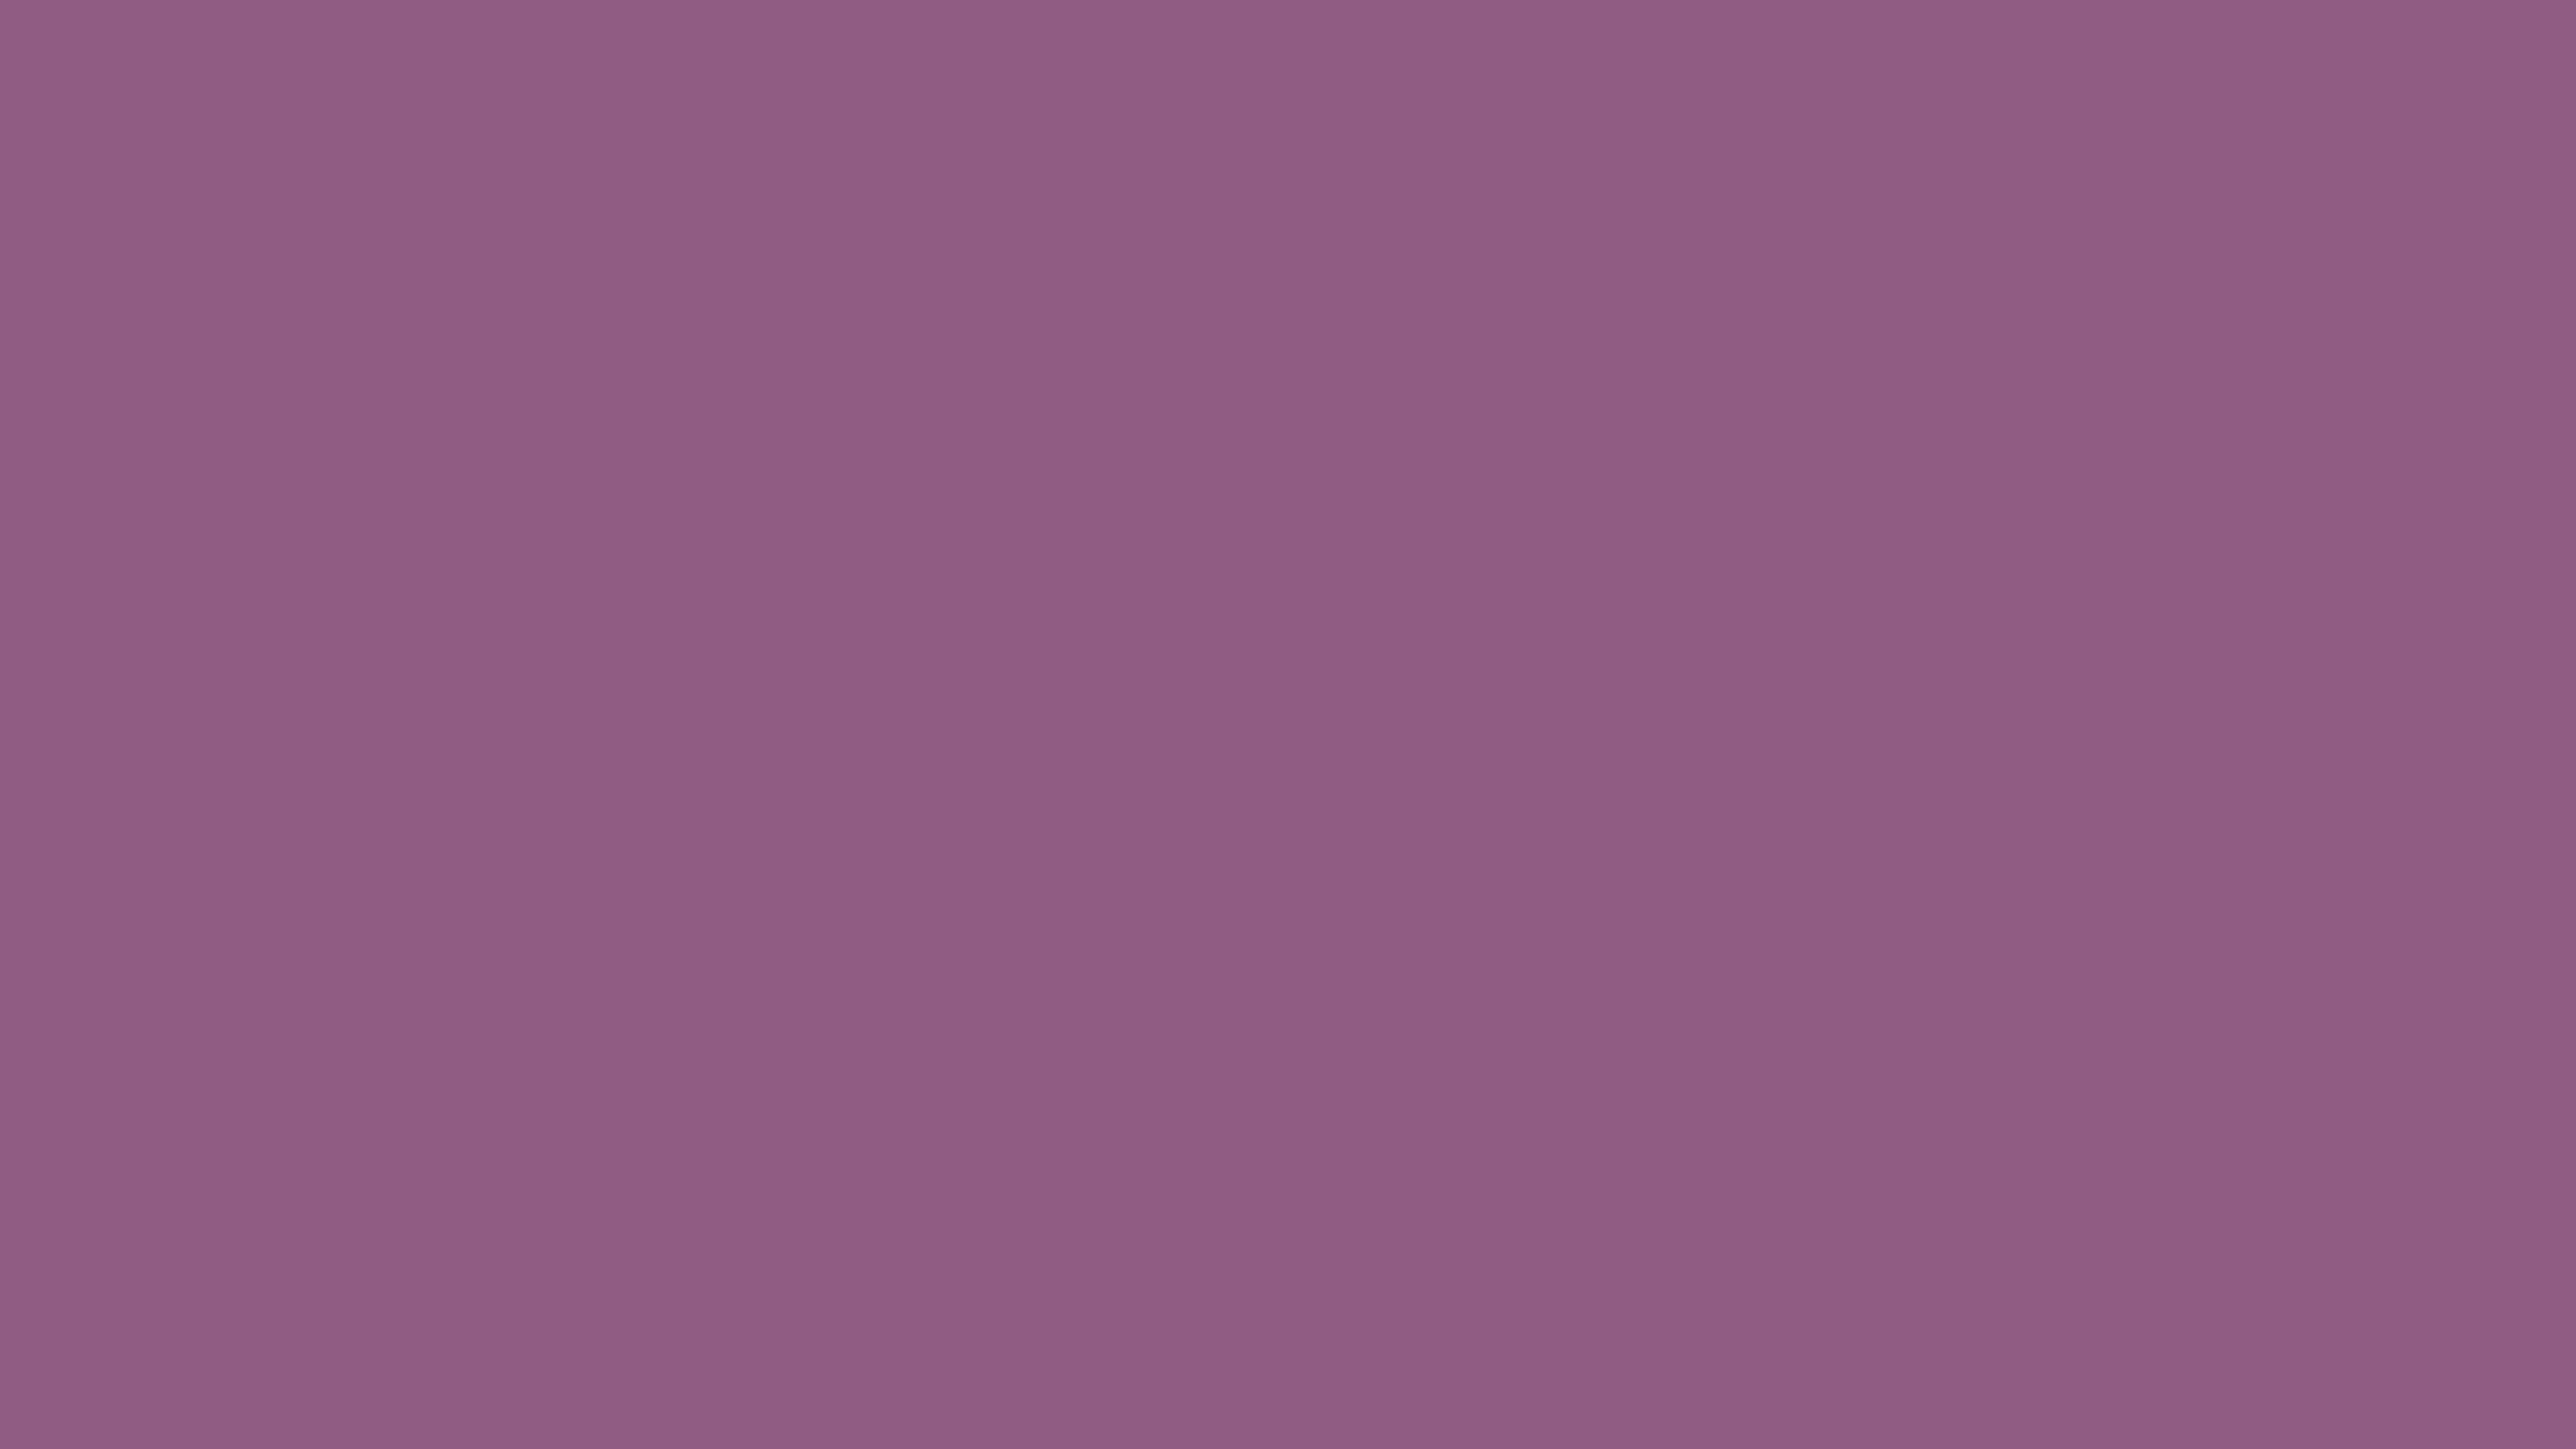 7680x4320 Antique Fuchsia Solid Color Background